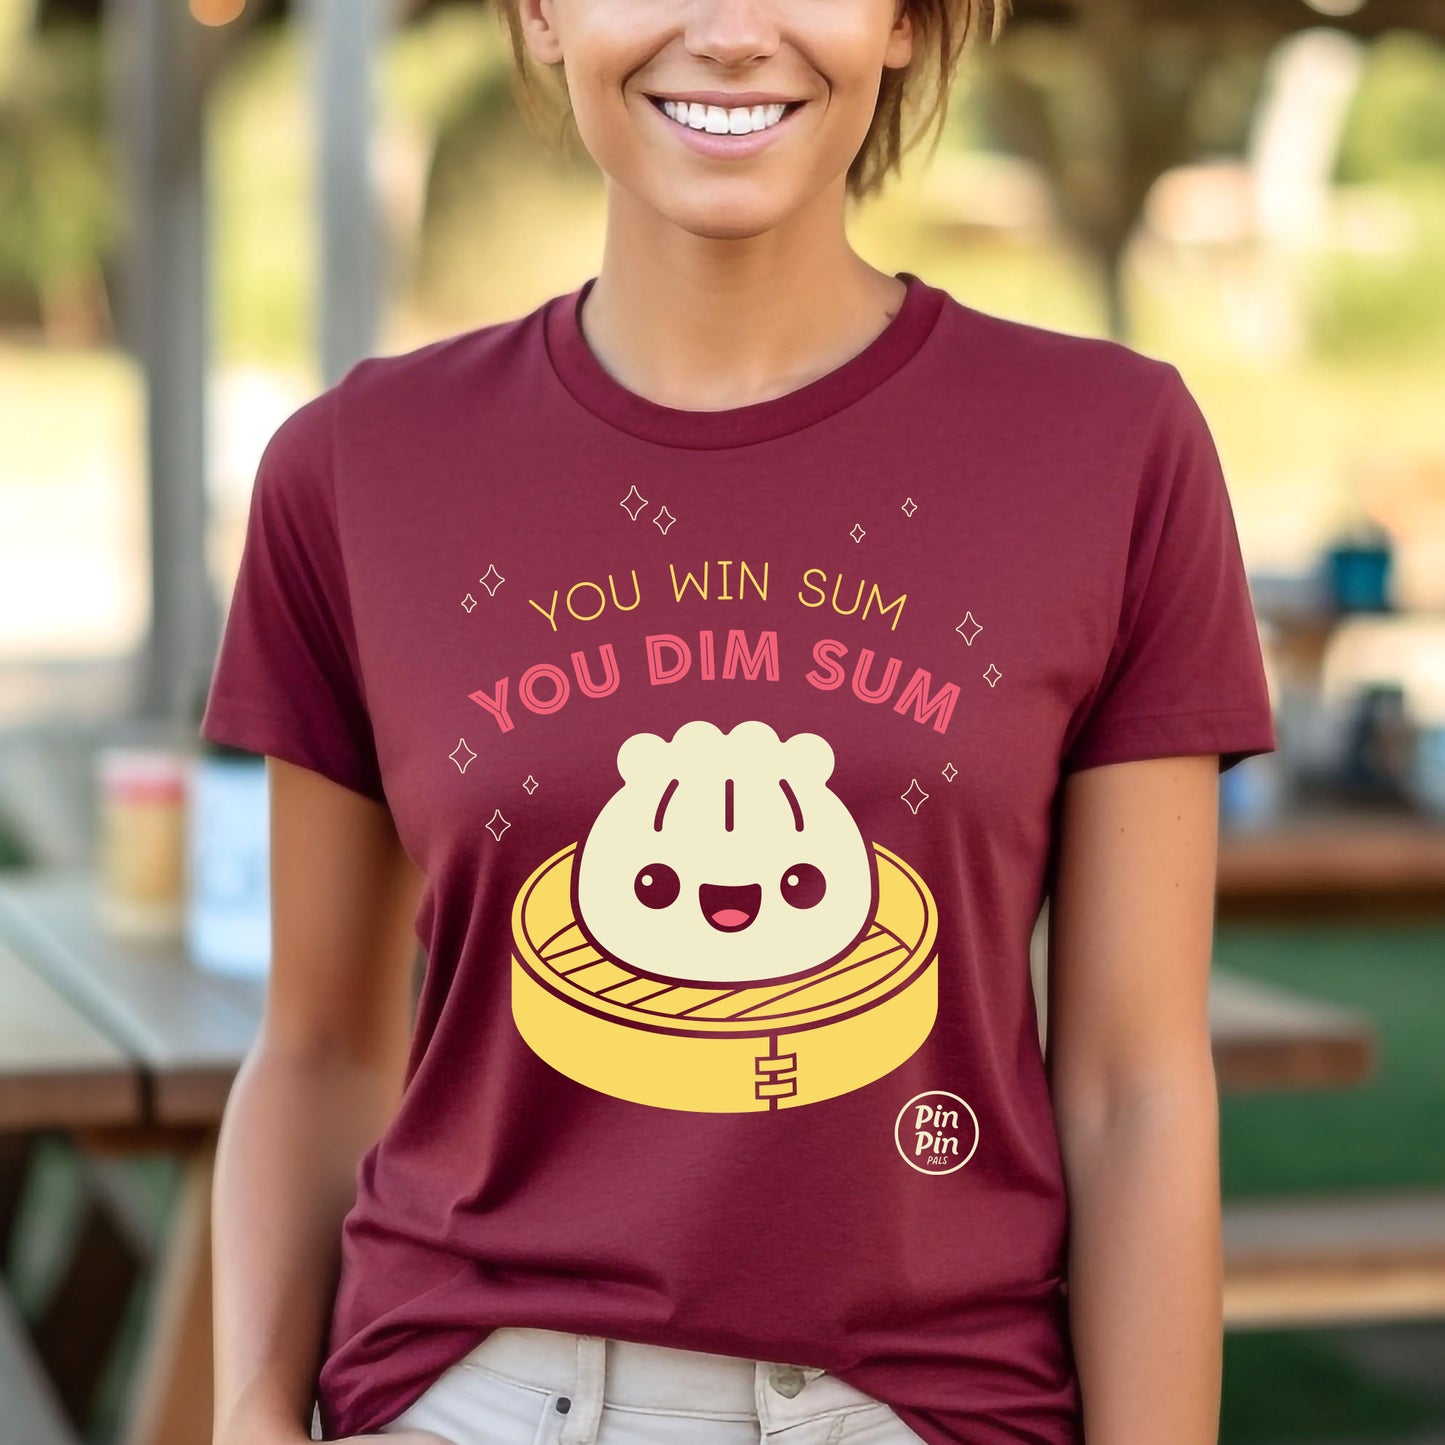 You Win Sum, You Dim Sum - Adult Unisex T-shirt